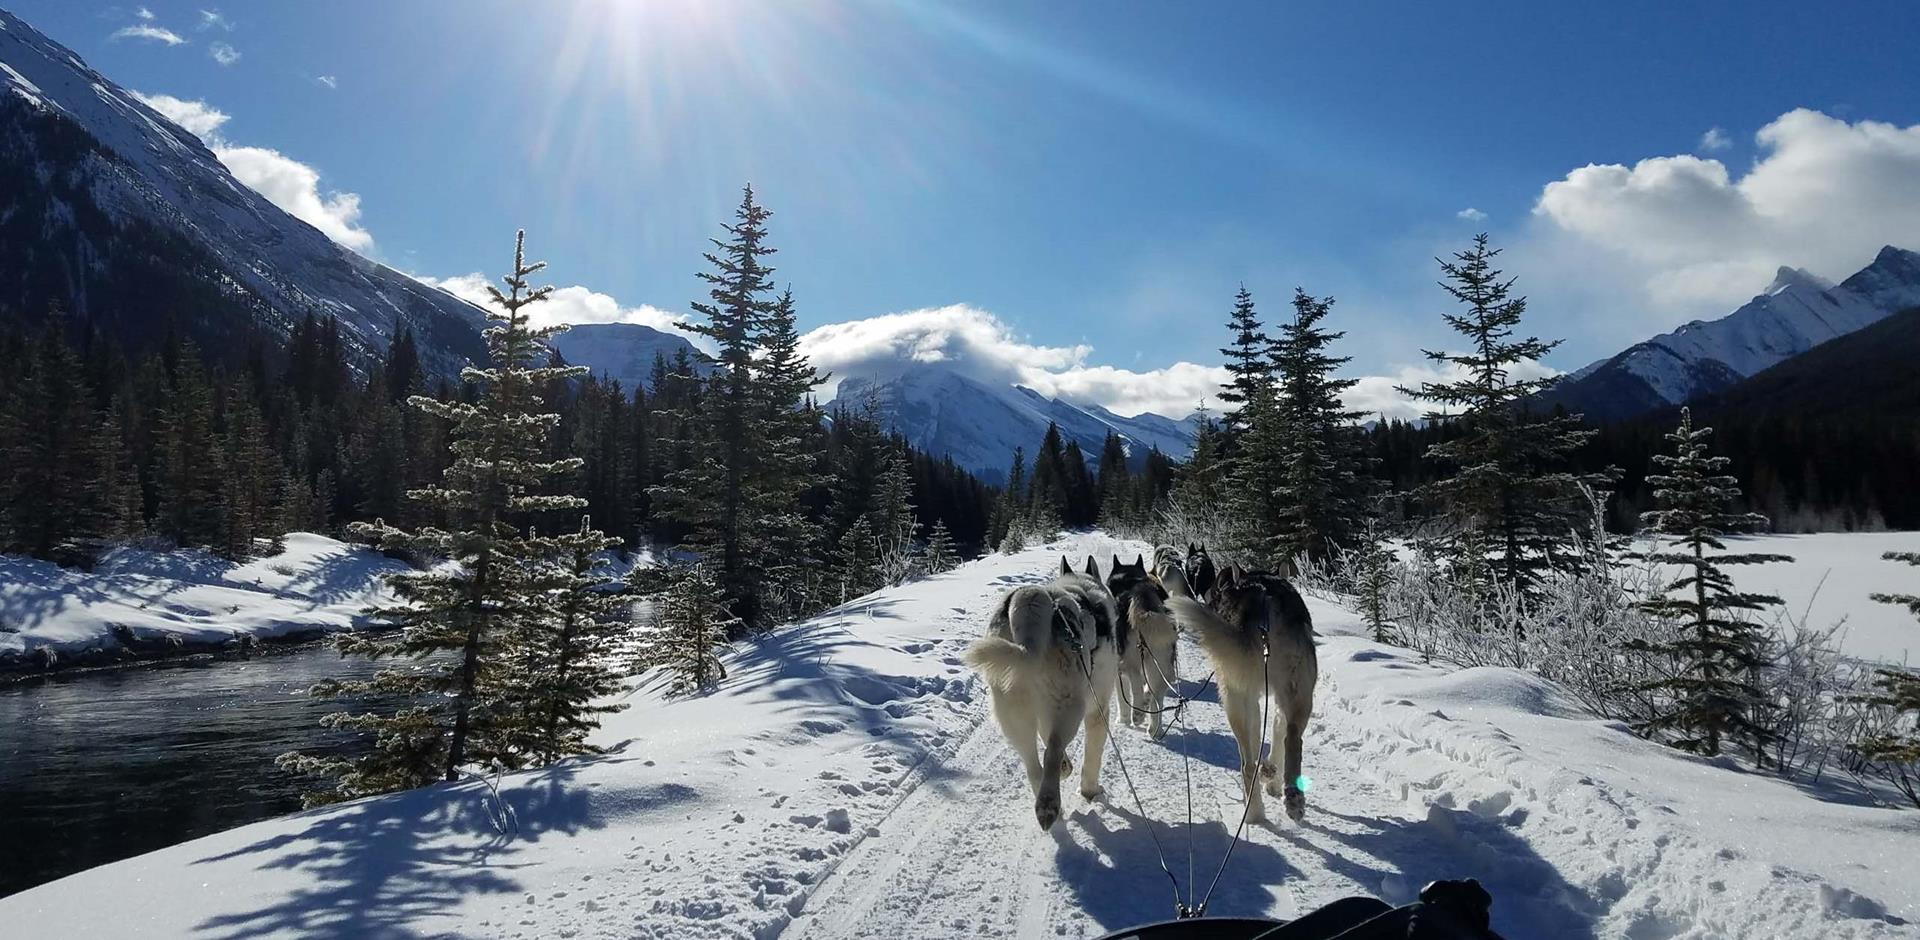 Dog sledding through the mountains Idatrod Alaska USA